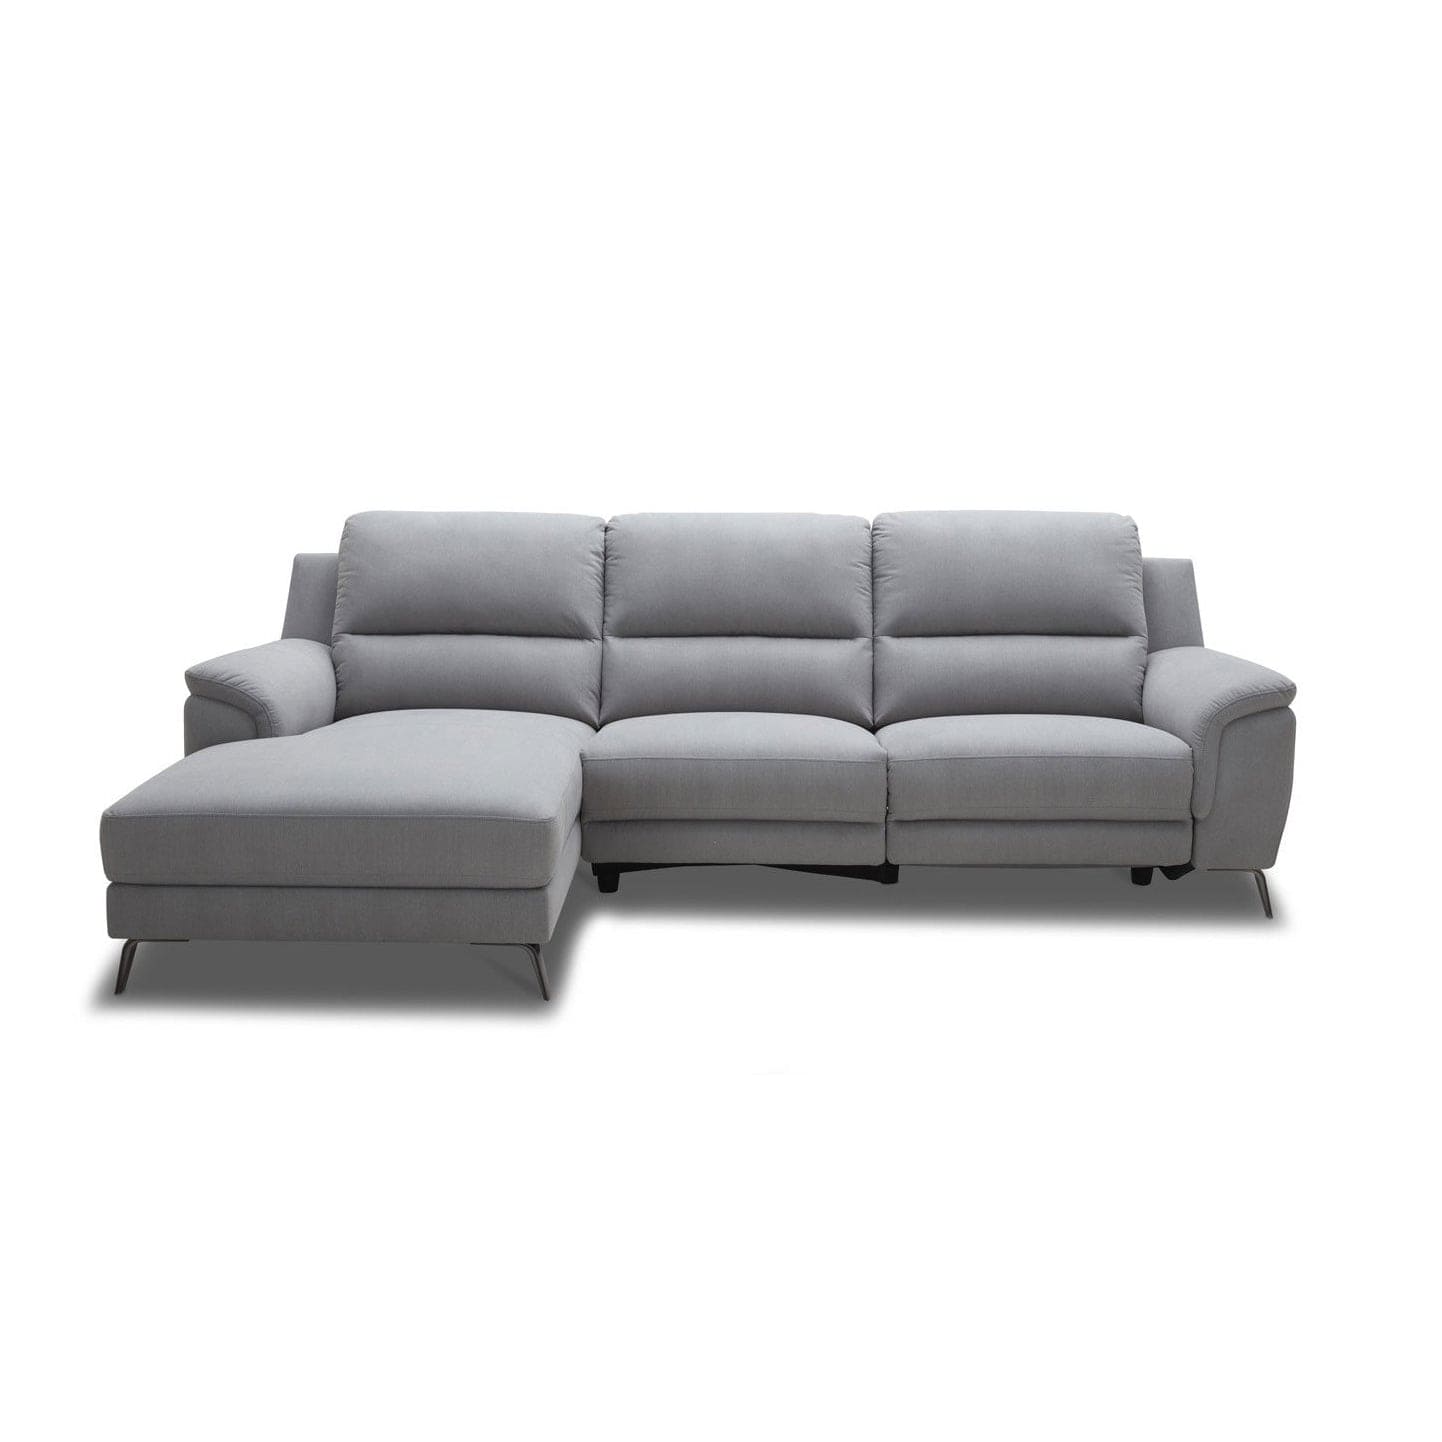 KUKA #5505 Fabric Sofa (L-Shape. Chaise Lounge) (I) picket and rail